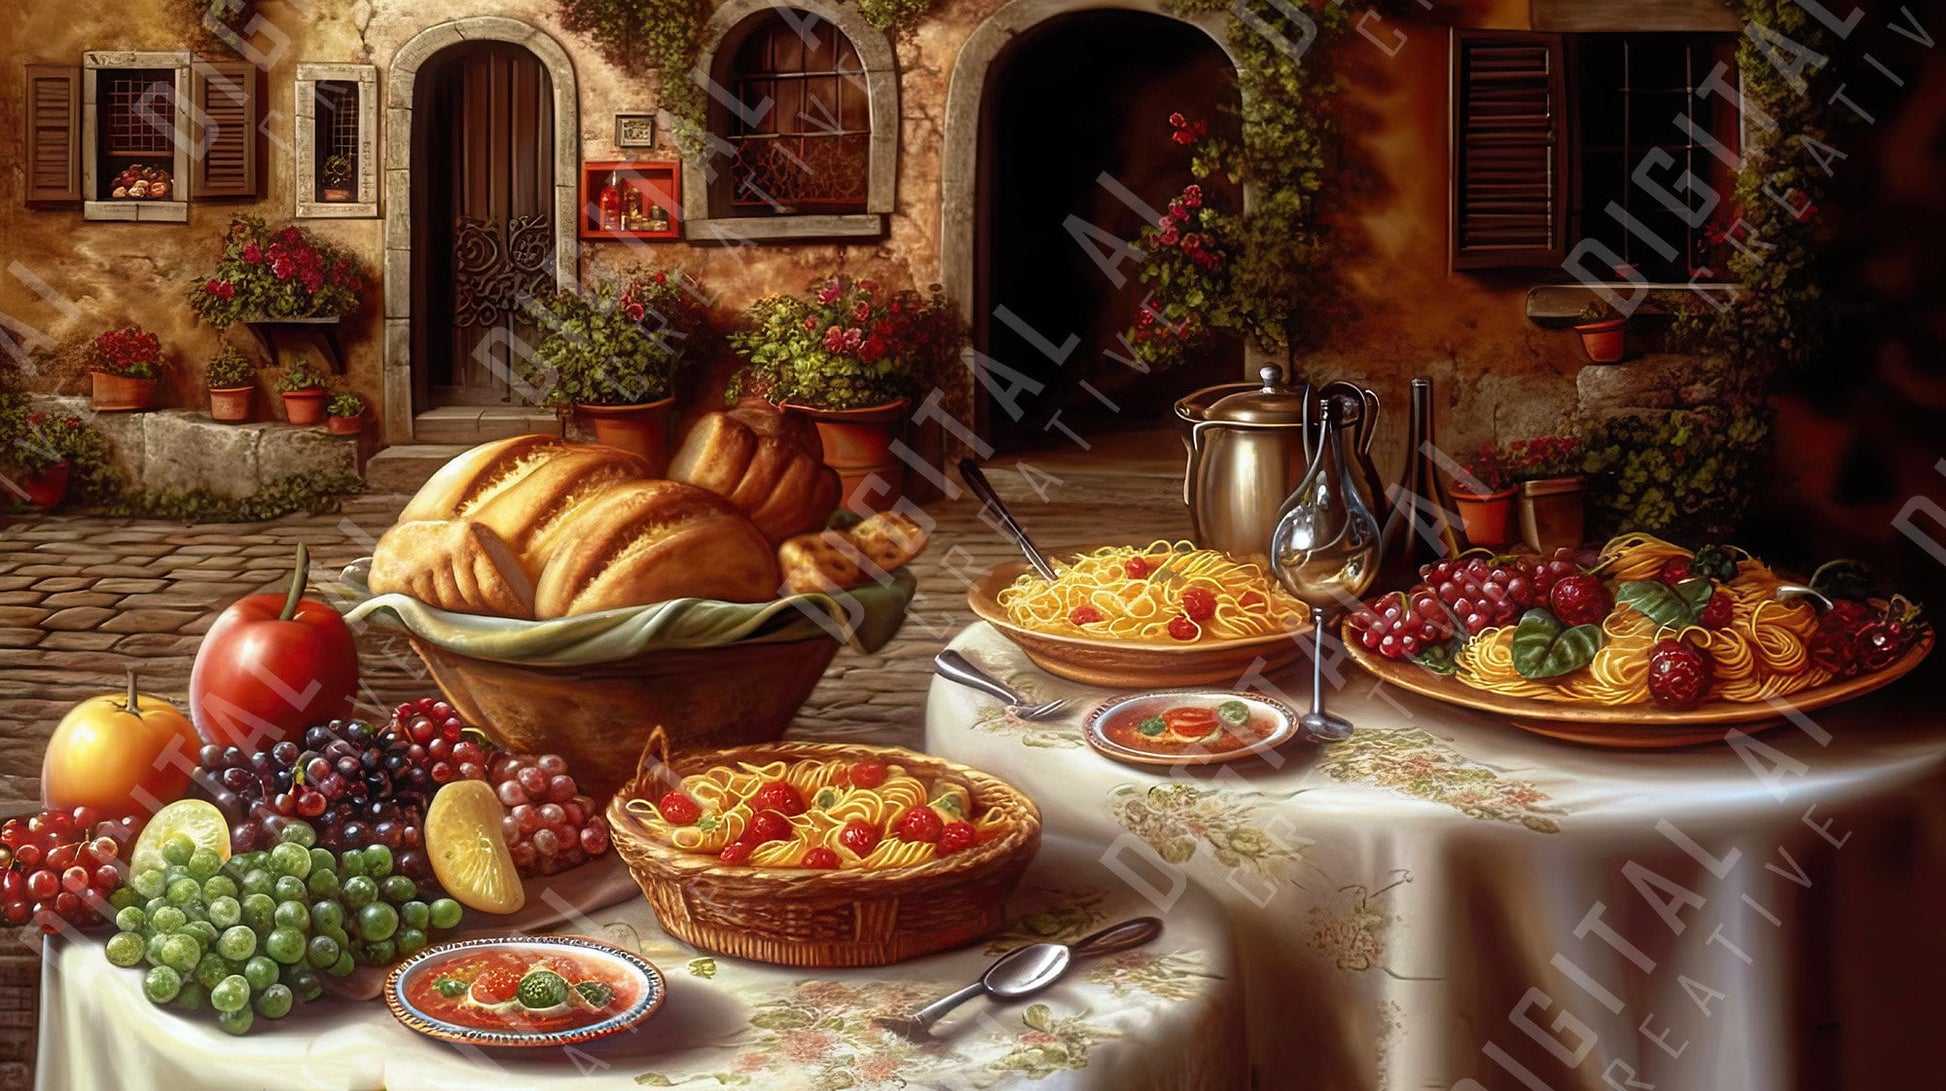 Buon Appetito! - An Outdoor Italian Café Experience 4X Images  8736 x 4896 Pixels @300DPI